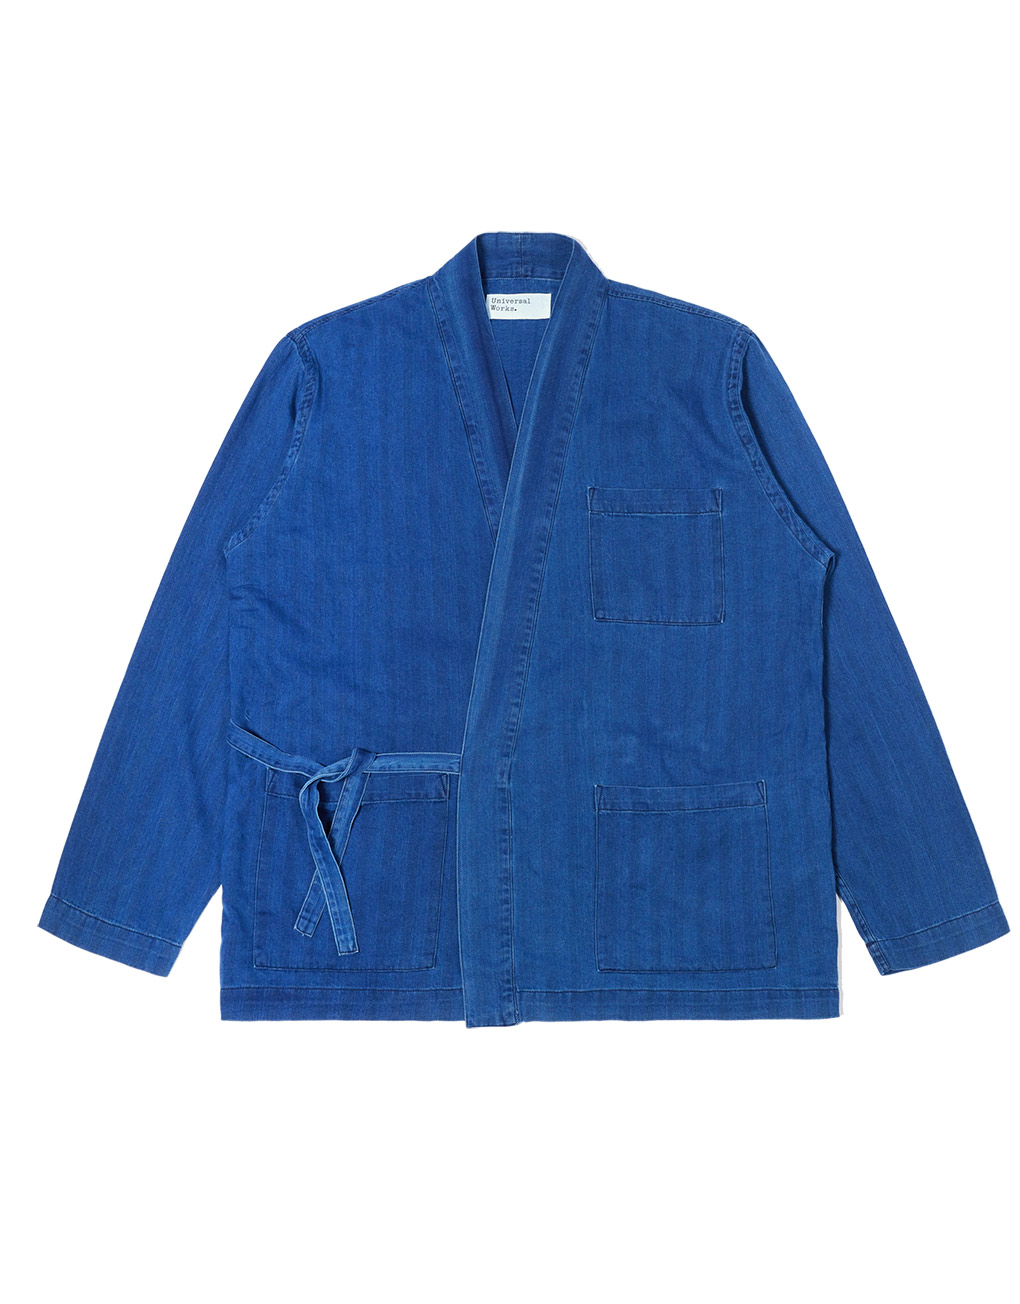 Universal Works – Kyoto work jacket in washed indigo herringbone denim